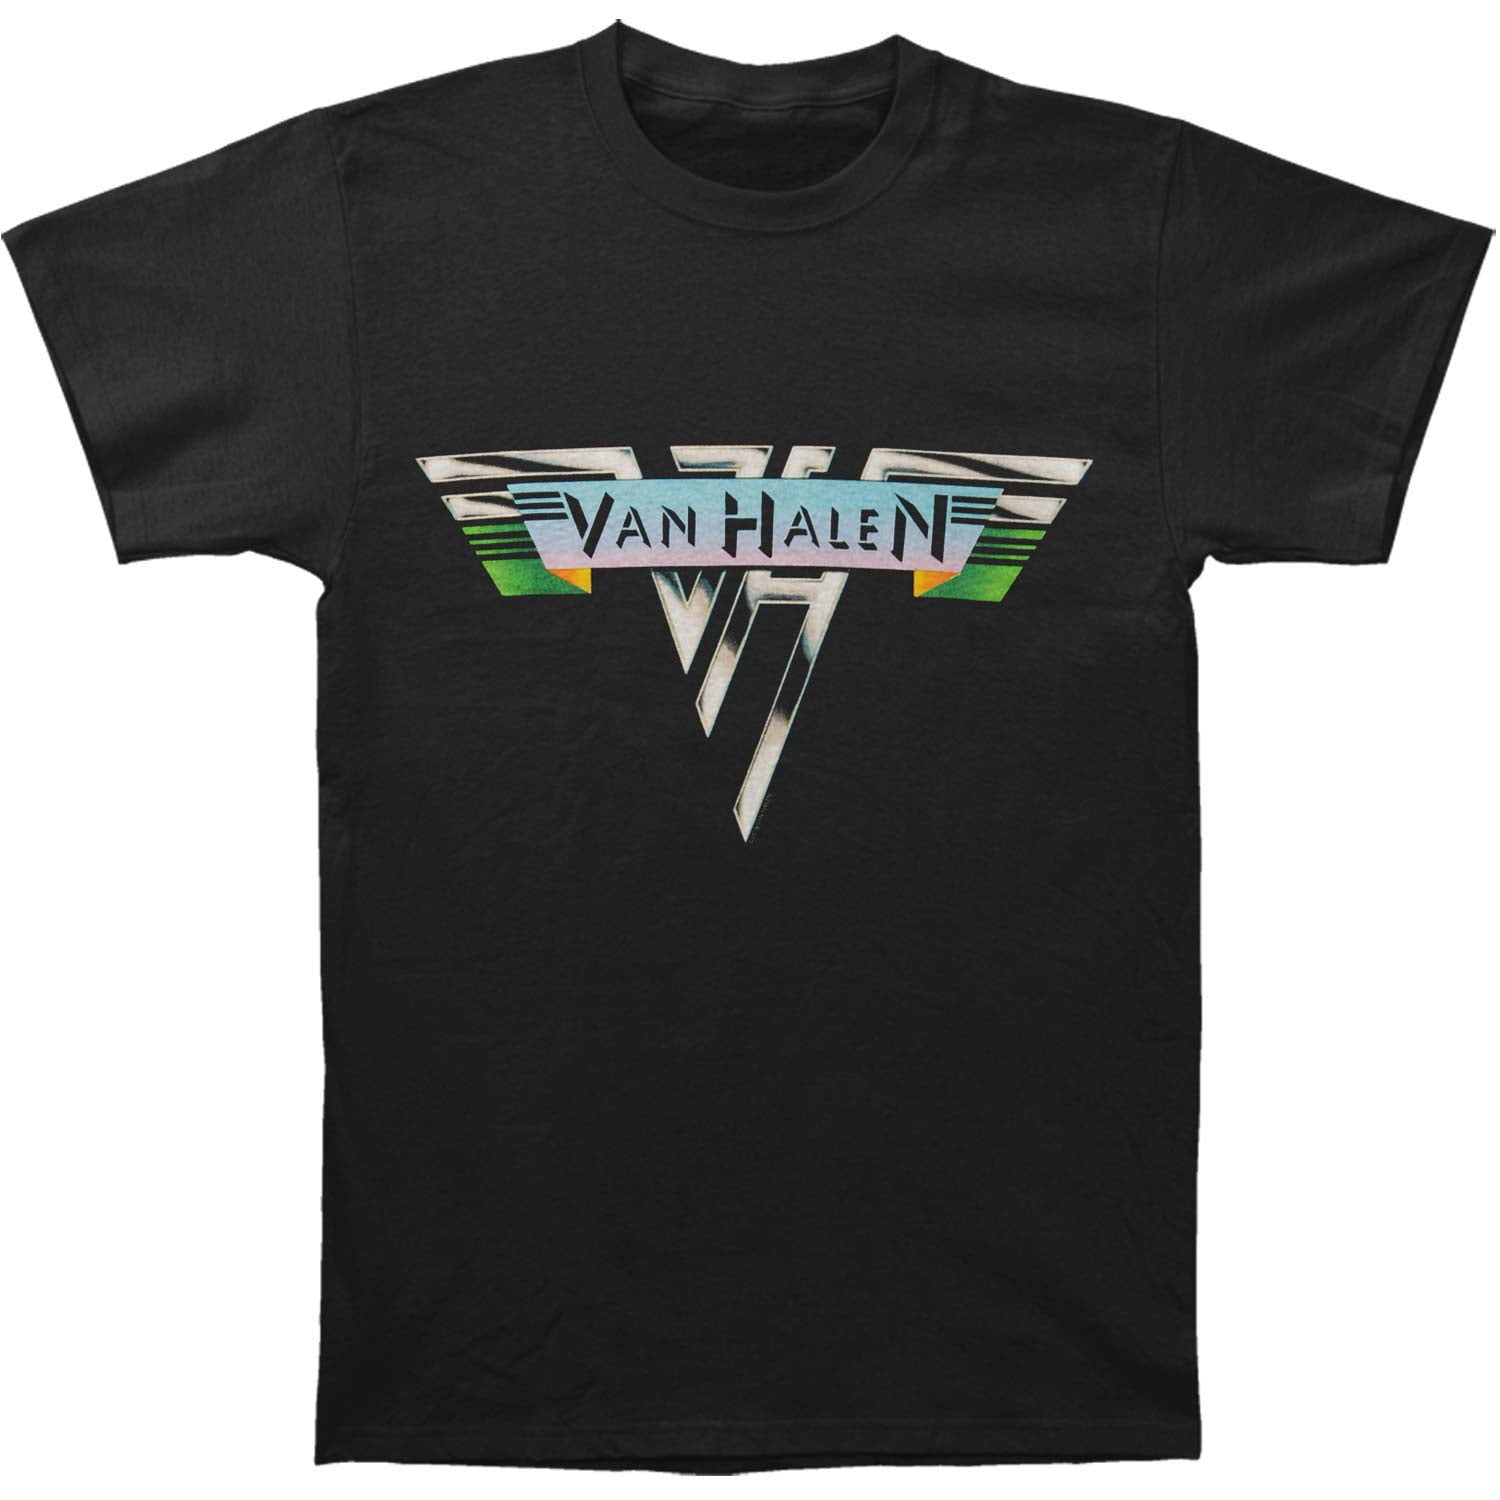 Van Halen Men's 1978 Vingtage T-shirt Small Black